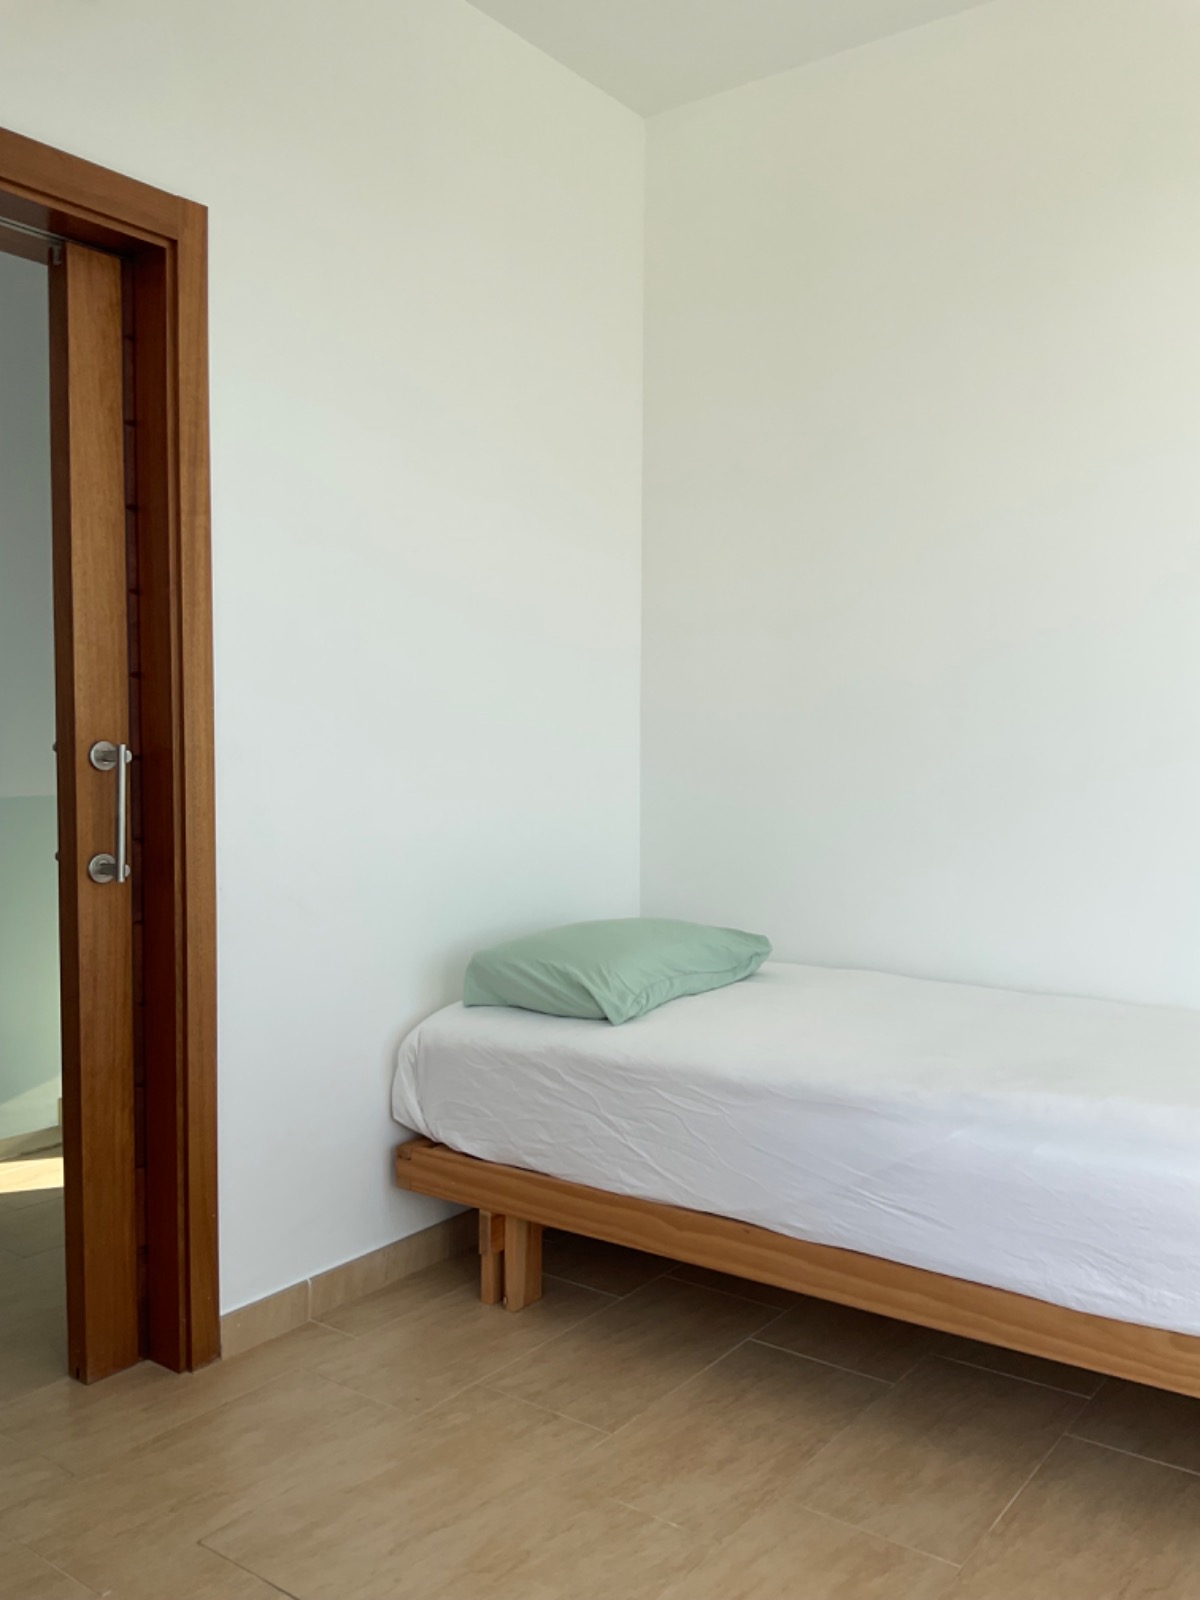 Resa estates Ibiza longterm rental te huur lange termijn slaapkamer 6.jpg